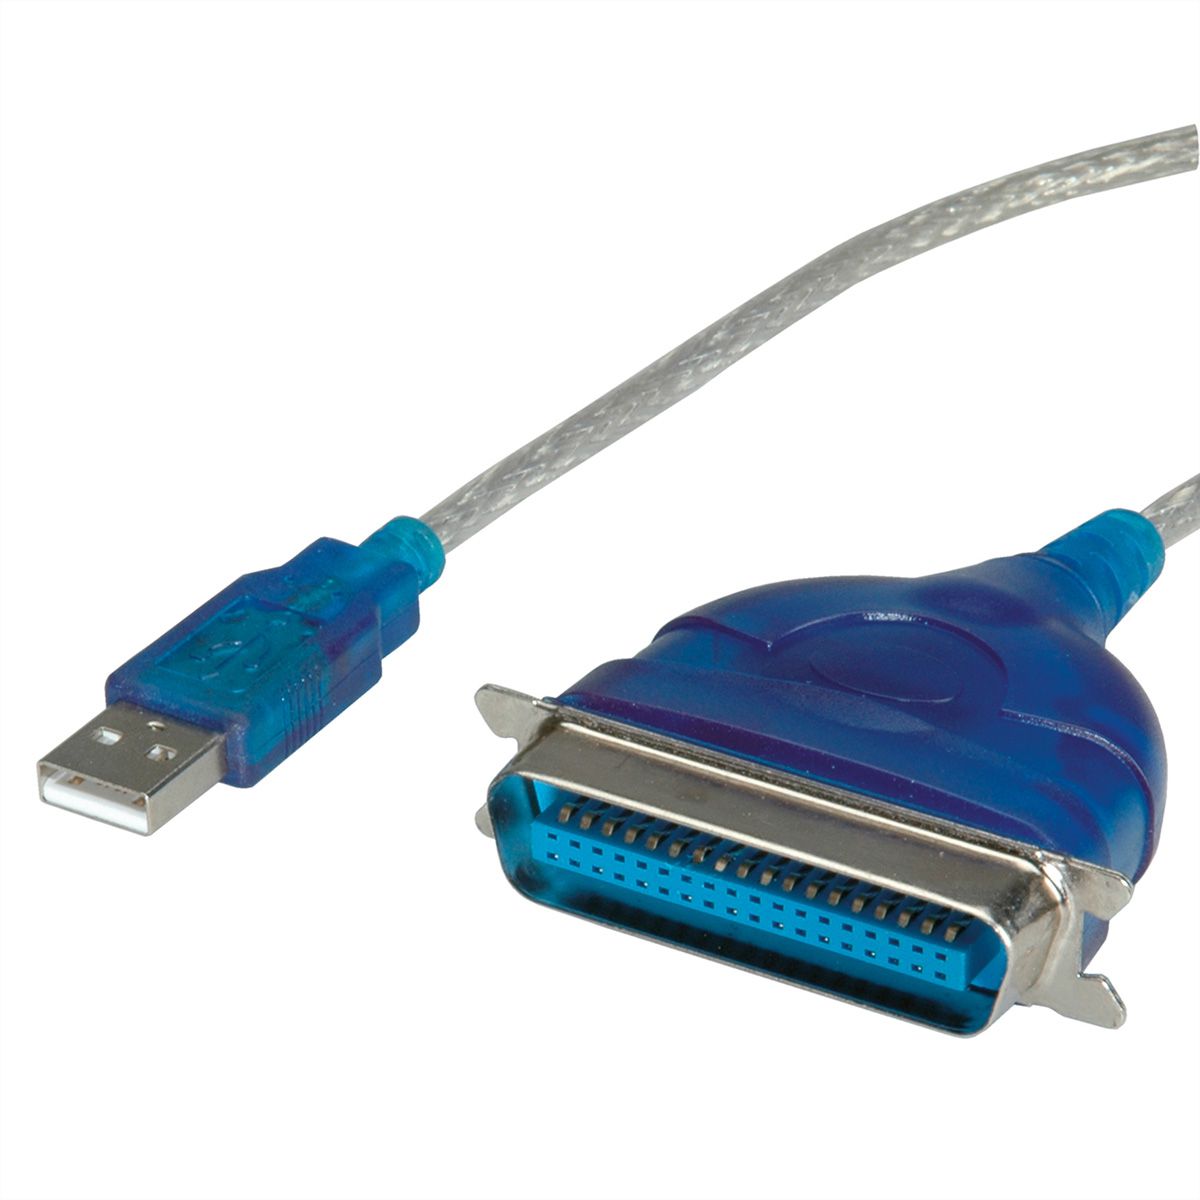 Câble USB VERS IMPRIMANTE PARALLELE Centronics 36